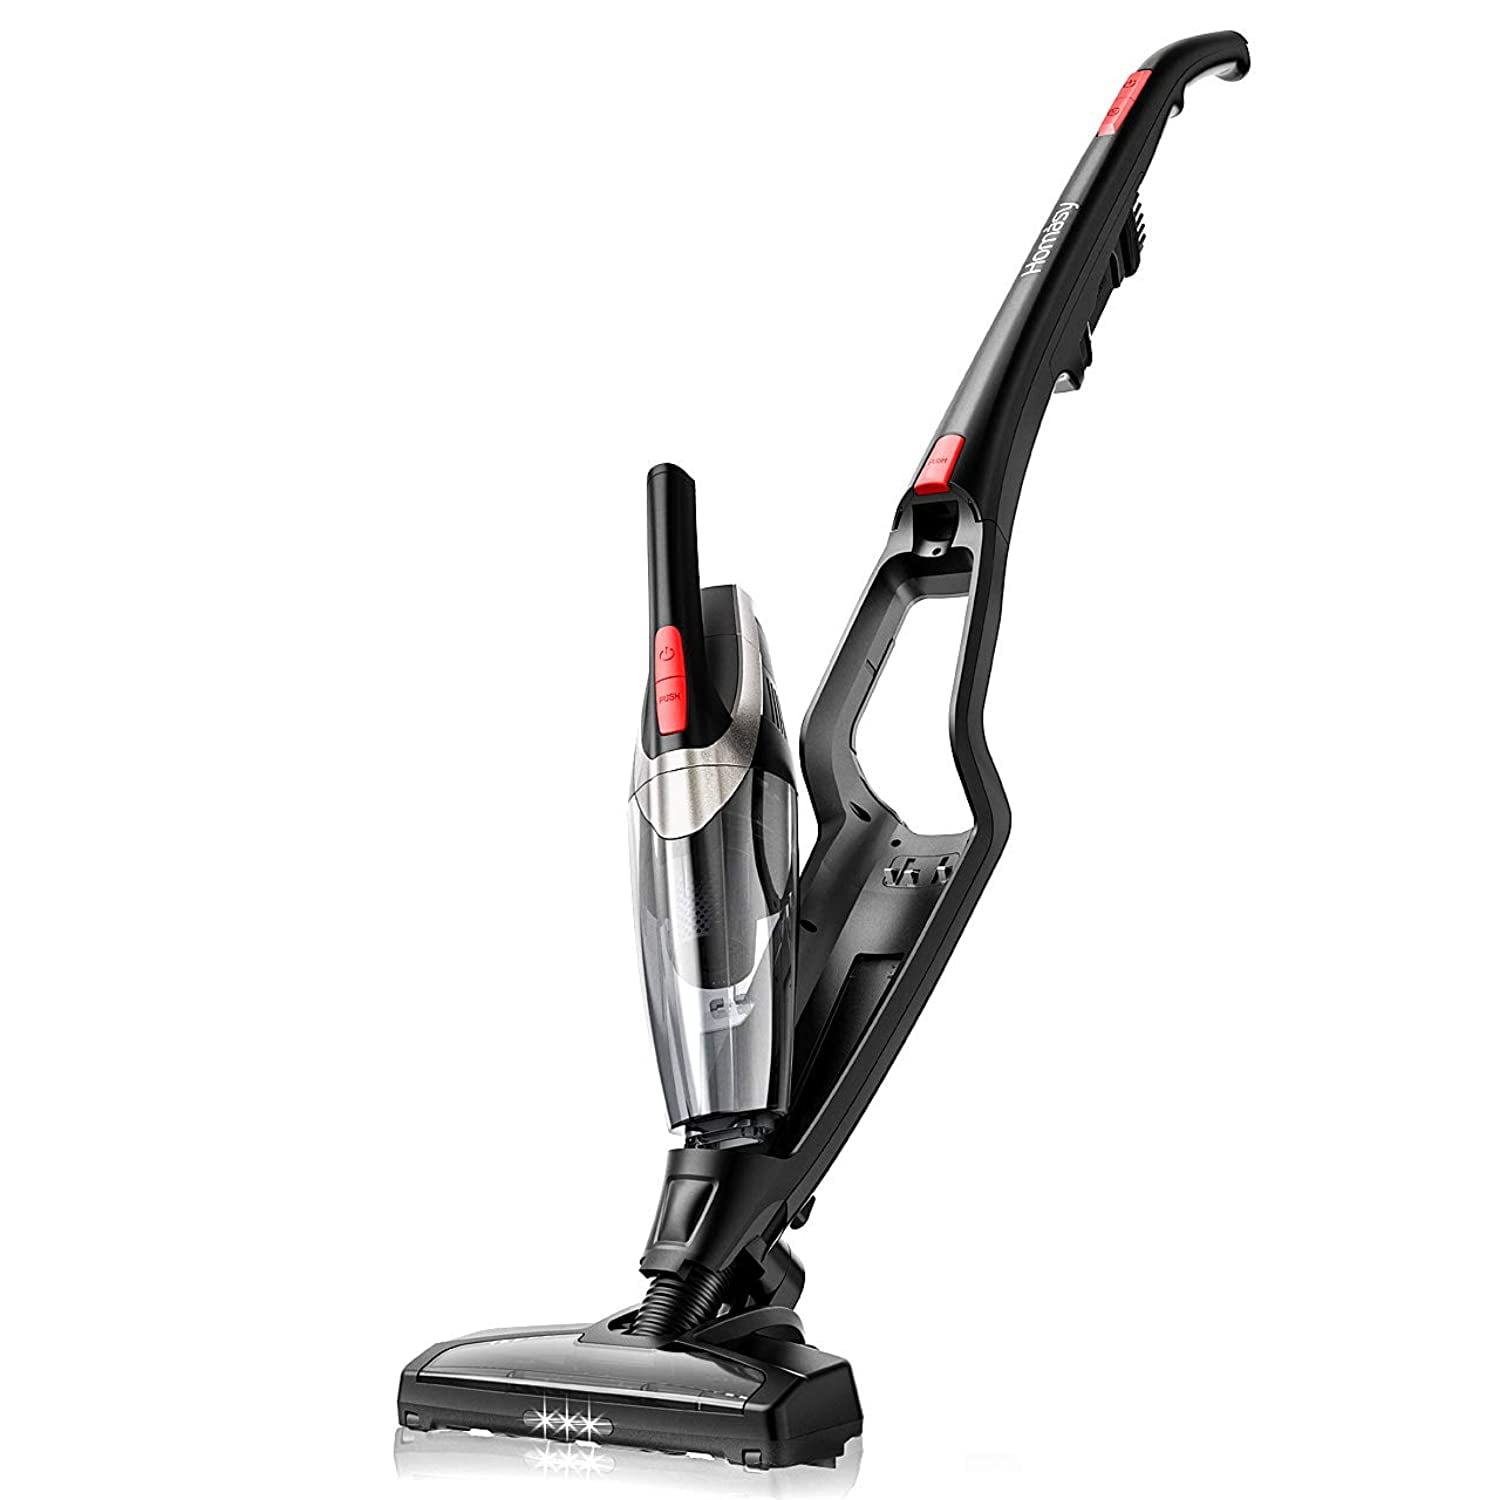 Homasy Cordless Vacuum Cleaner, 2-in-1 Stick Handheld Vacuum, Powerful